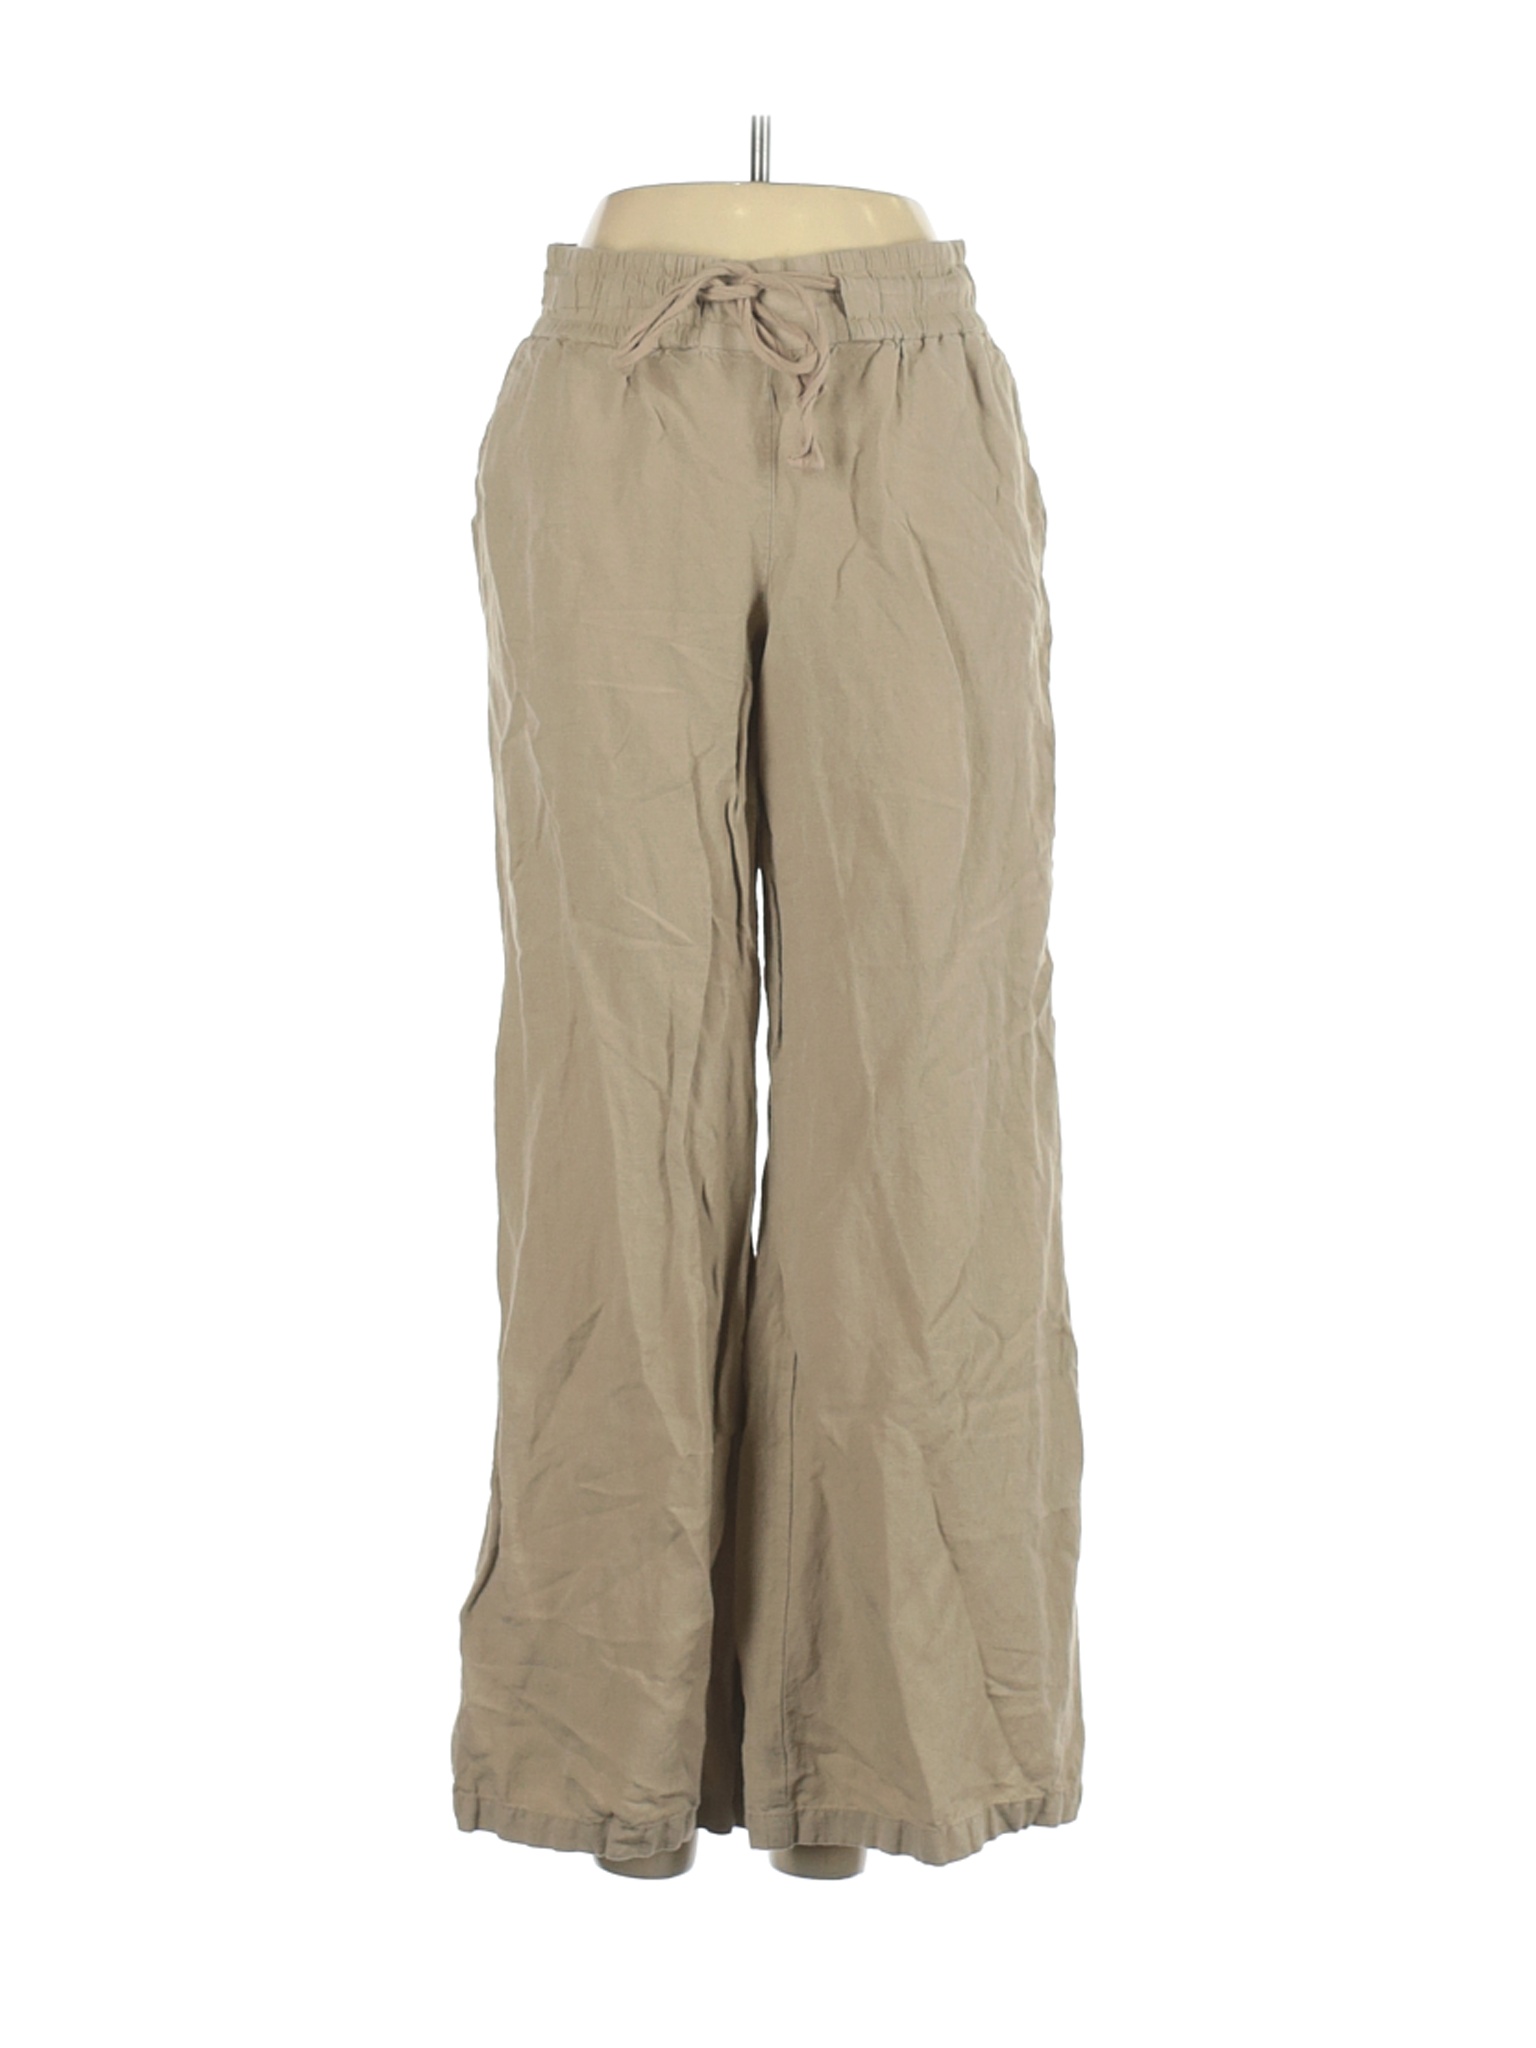 A New Day Women Brown Linen Pants S | eBay